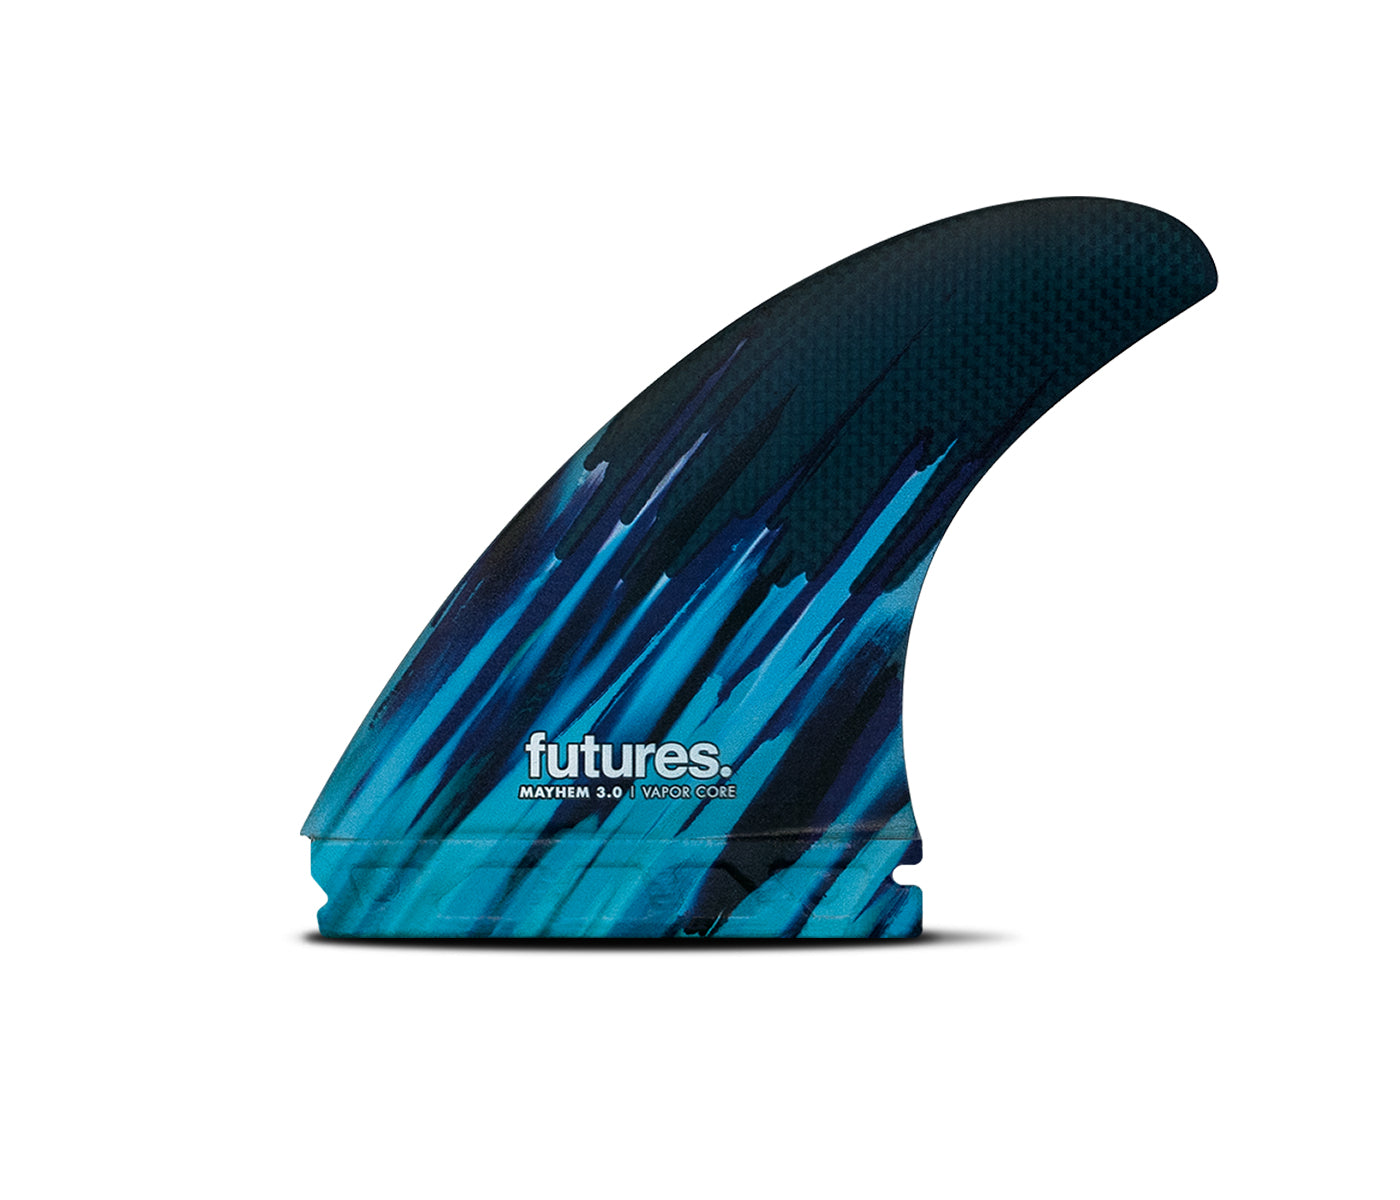 Futures MAYHEM 3.0 - Vapor Core - Board Store FuturesFins  